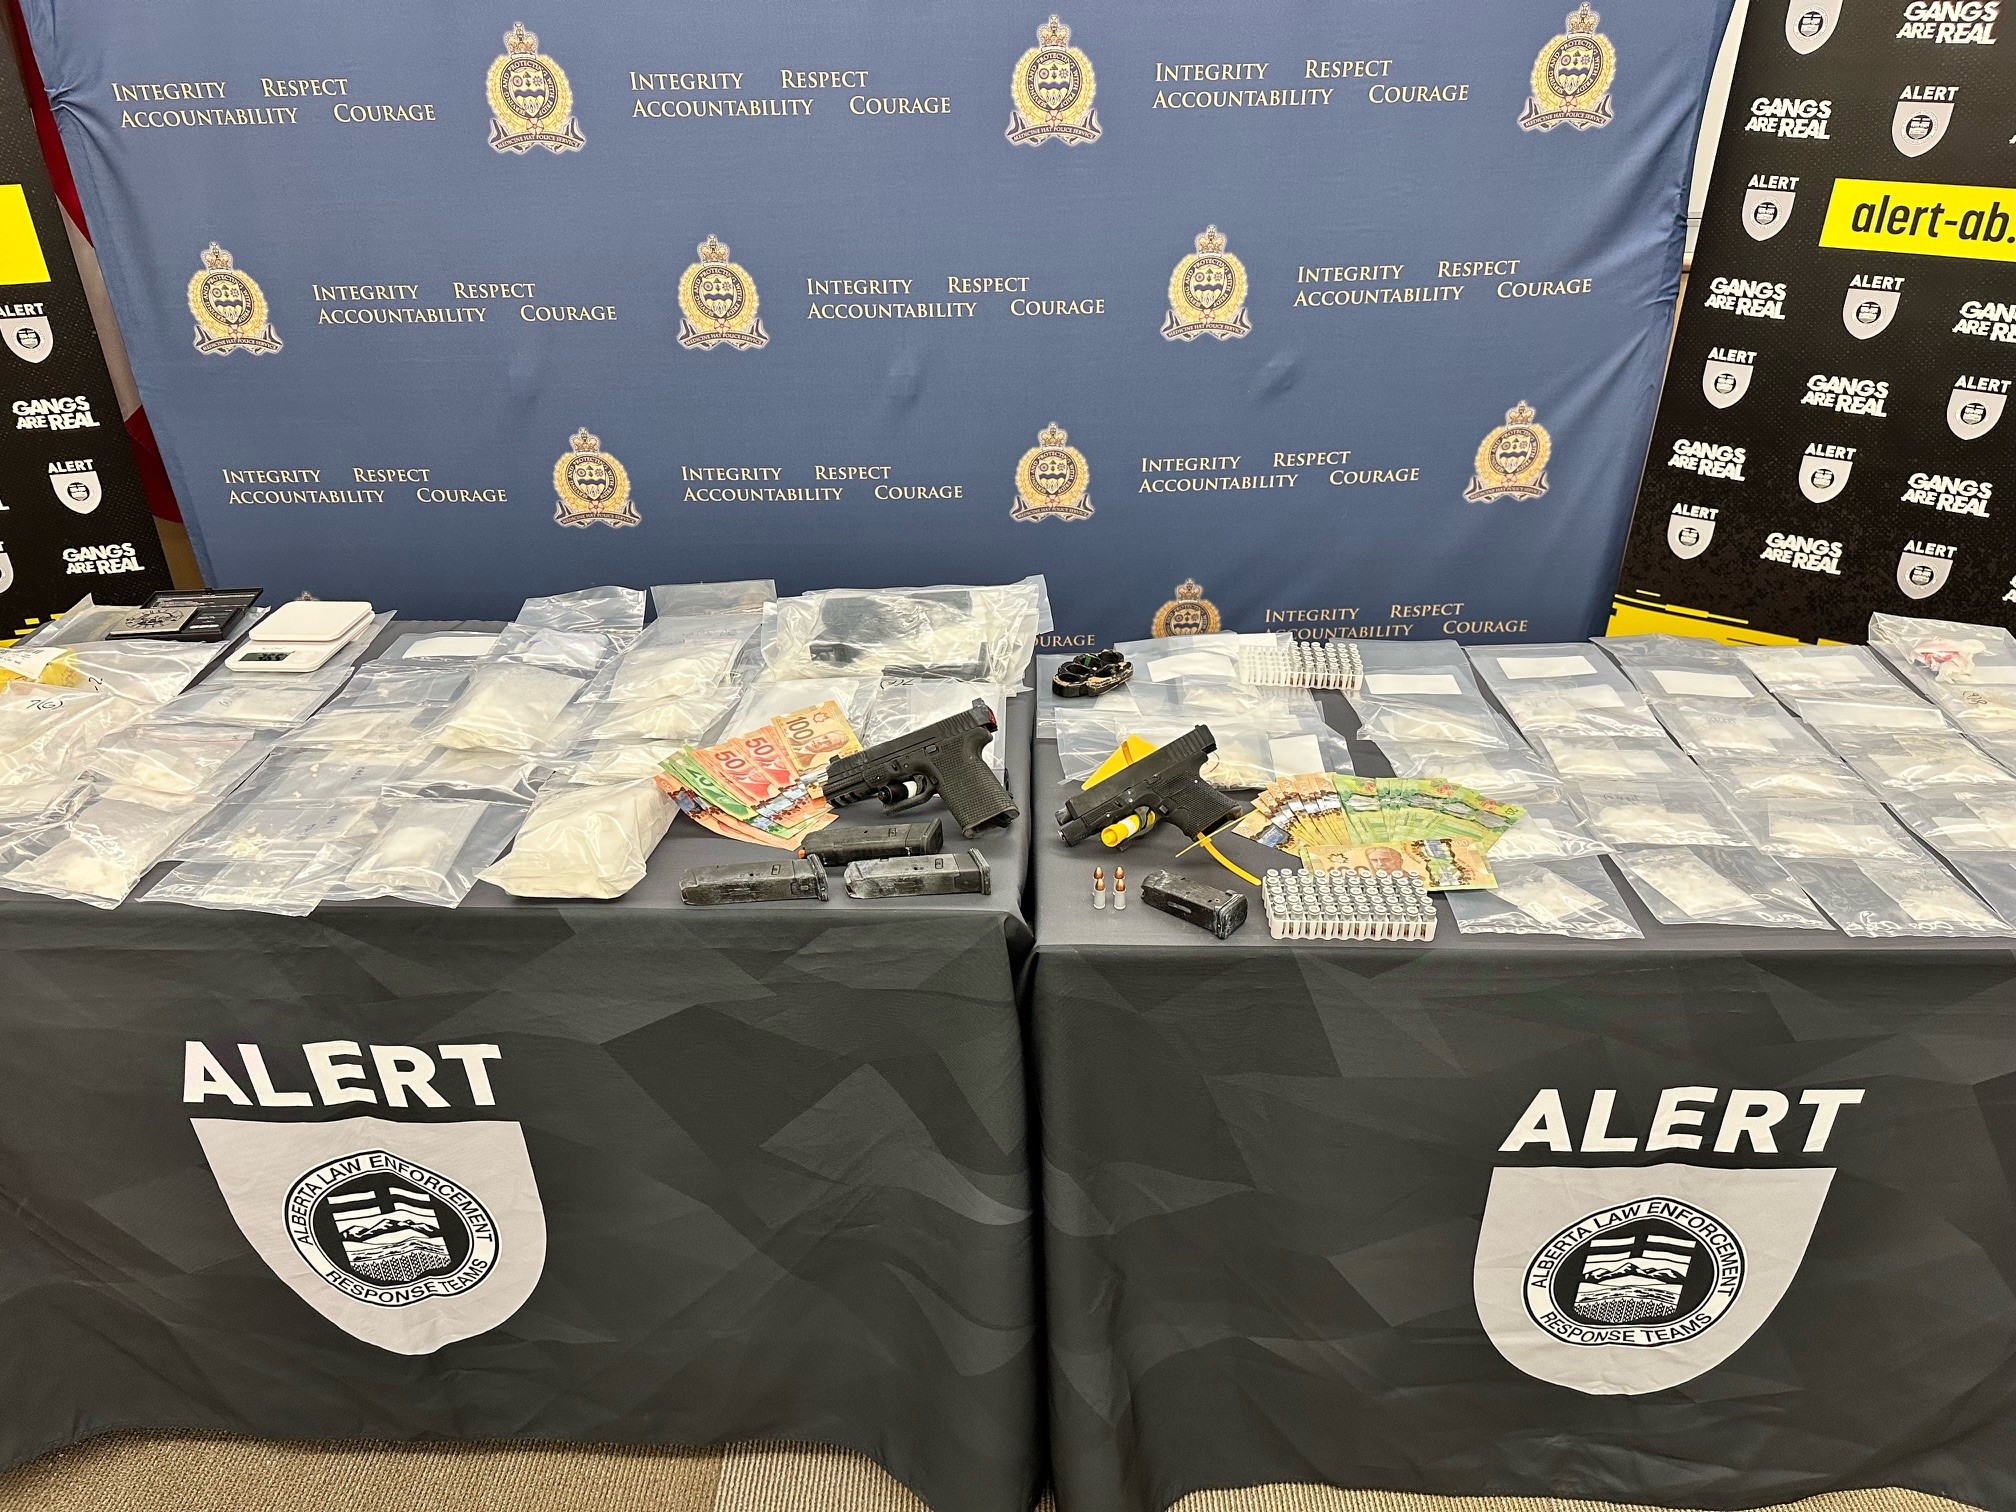 3D printed firearms, drugs seized in southeast Alberta